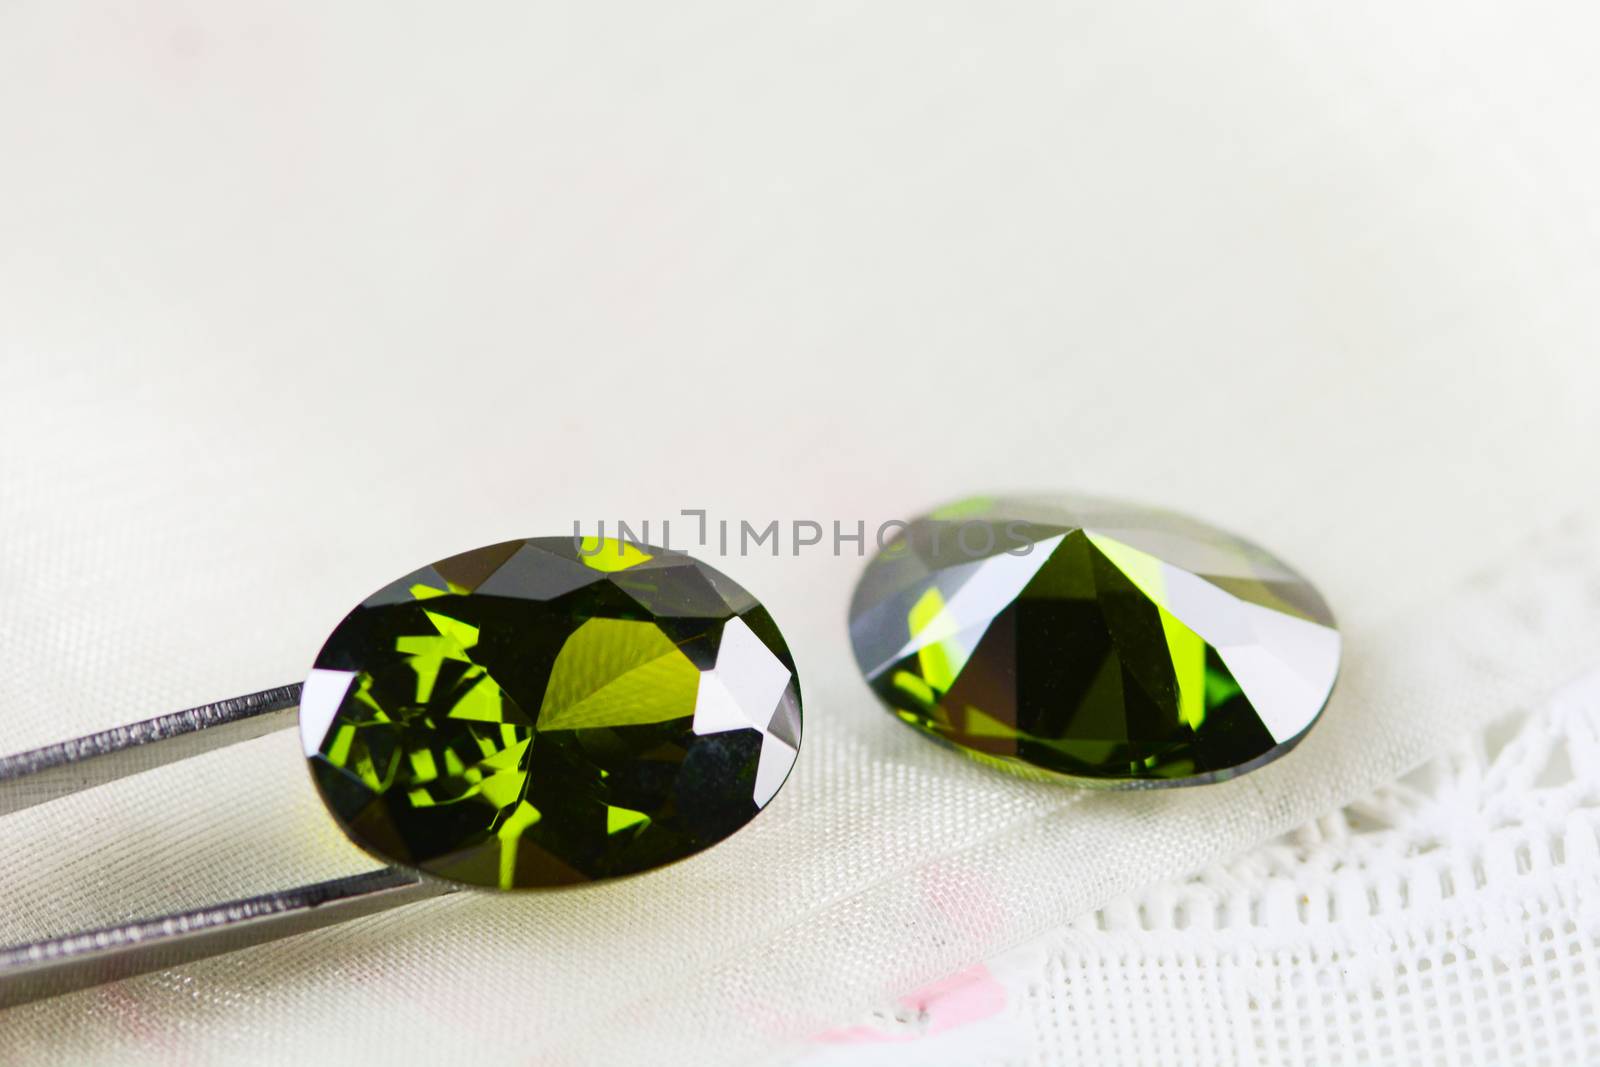 Cubic zirconia gemstones, oval shape, various color gemstones by yuiyuize